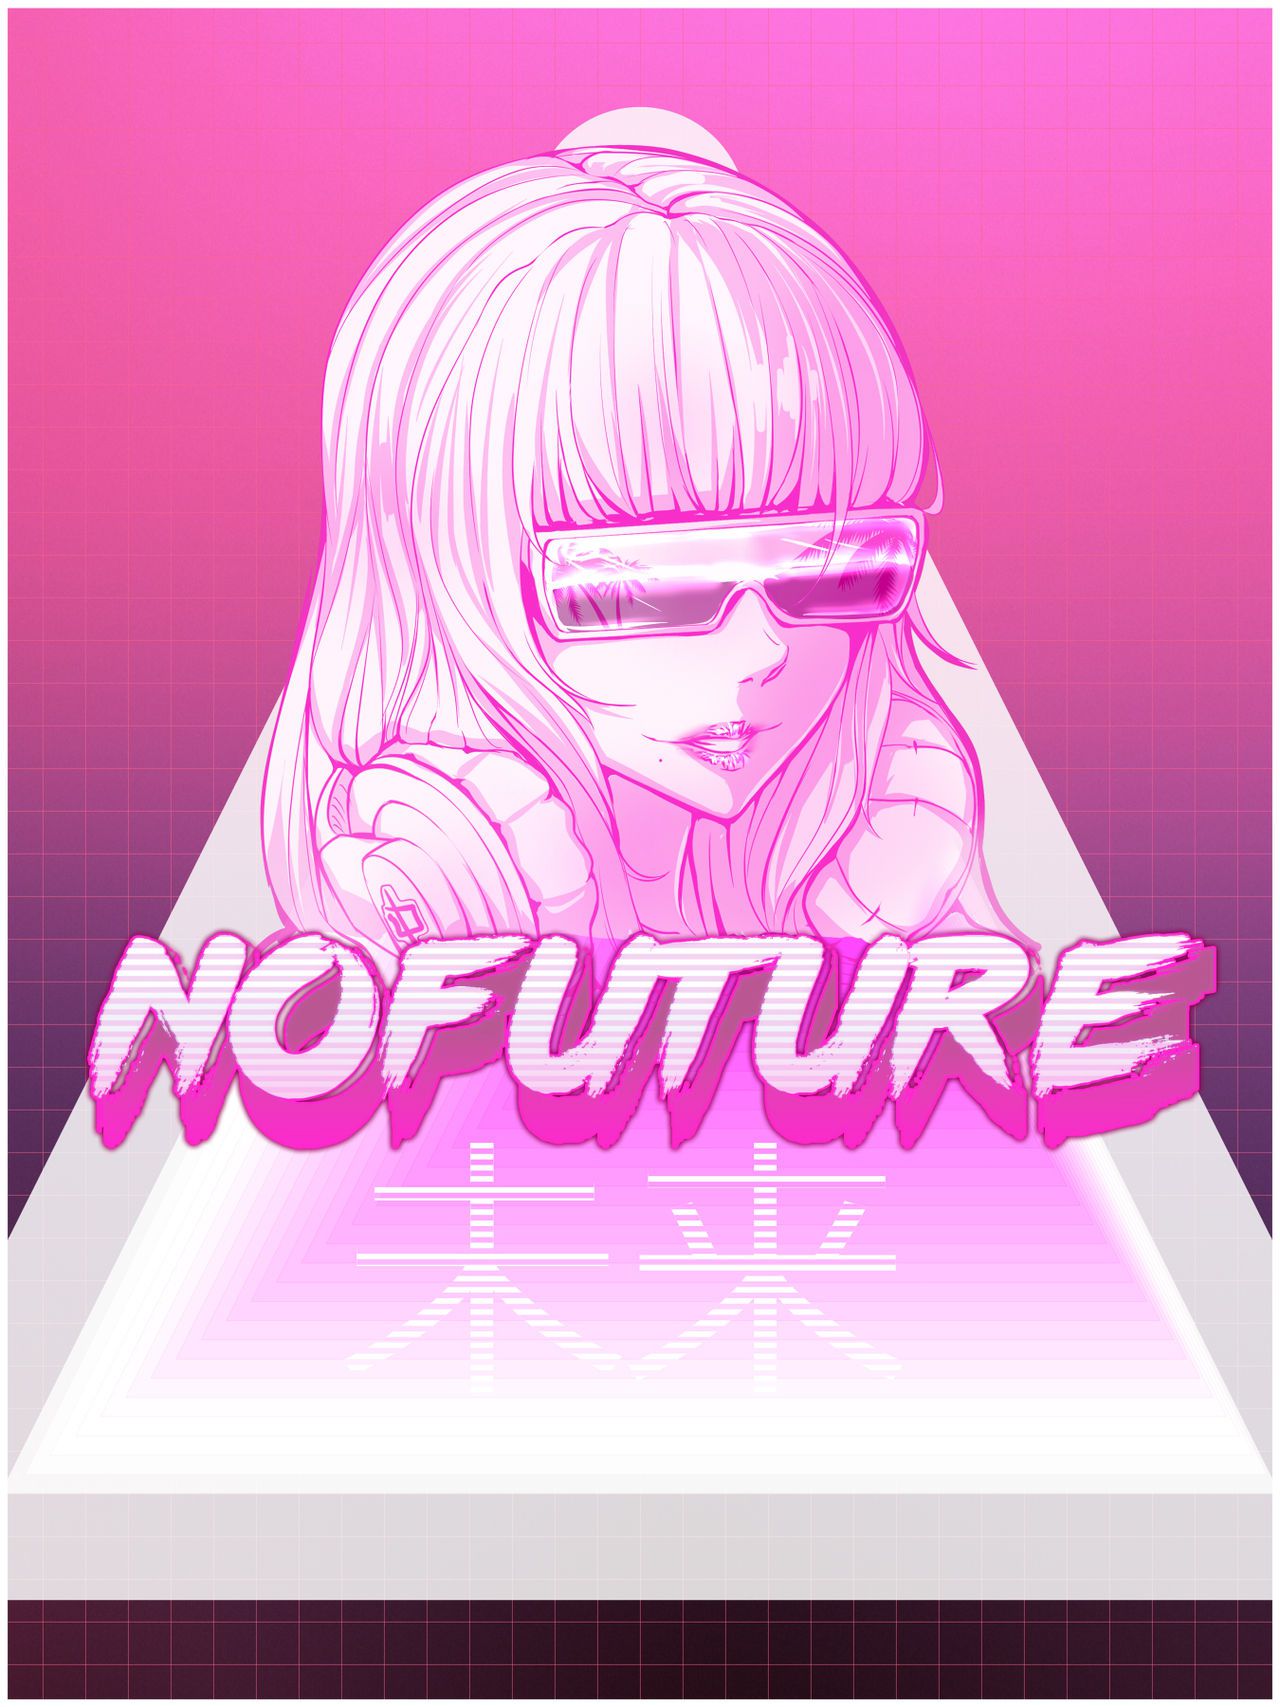 Artist - NoFuture 138